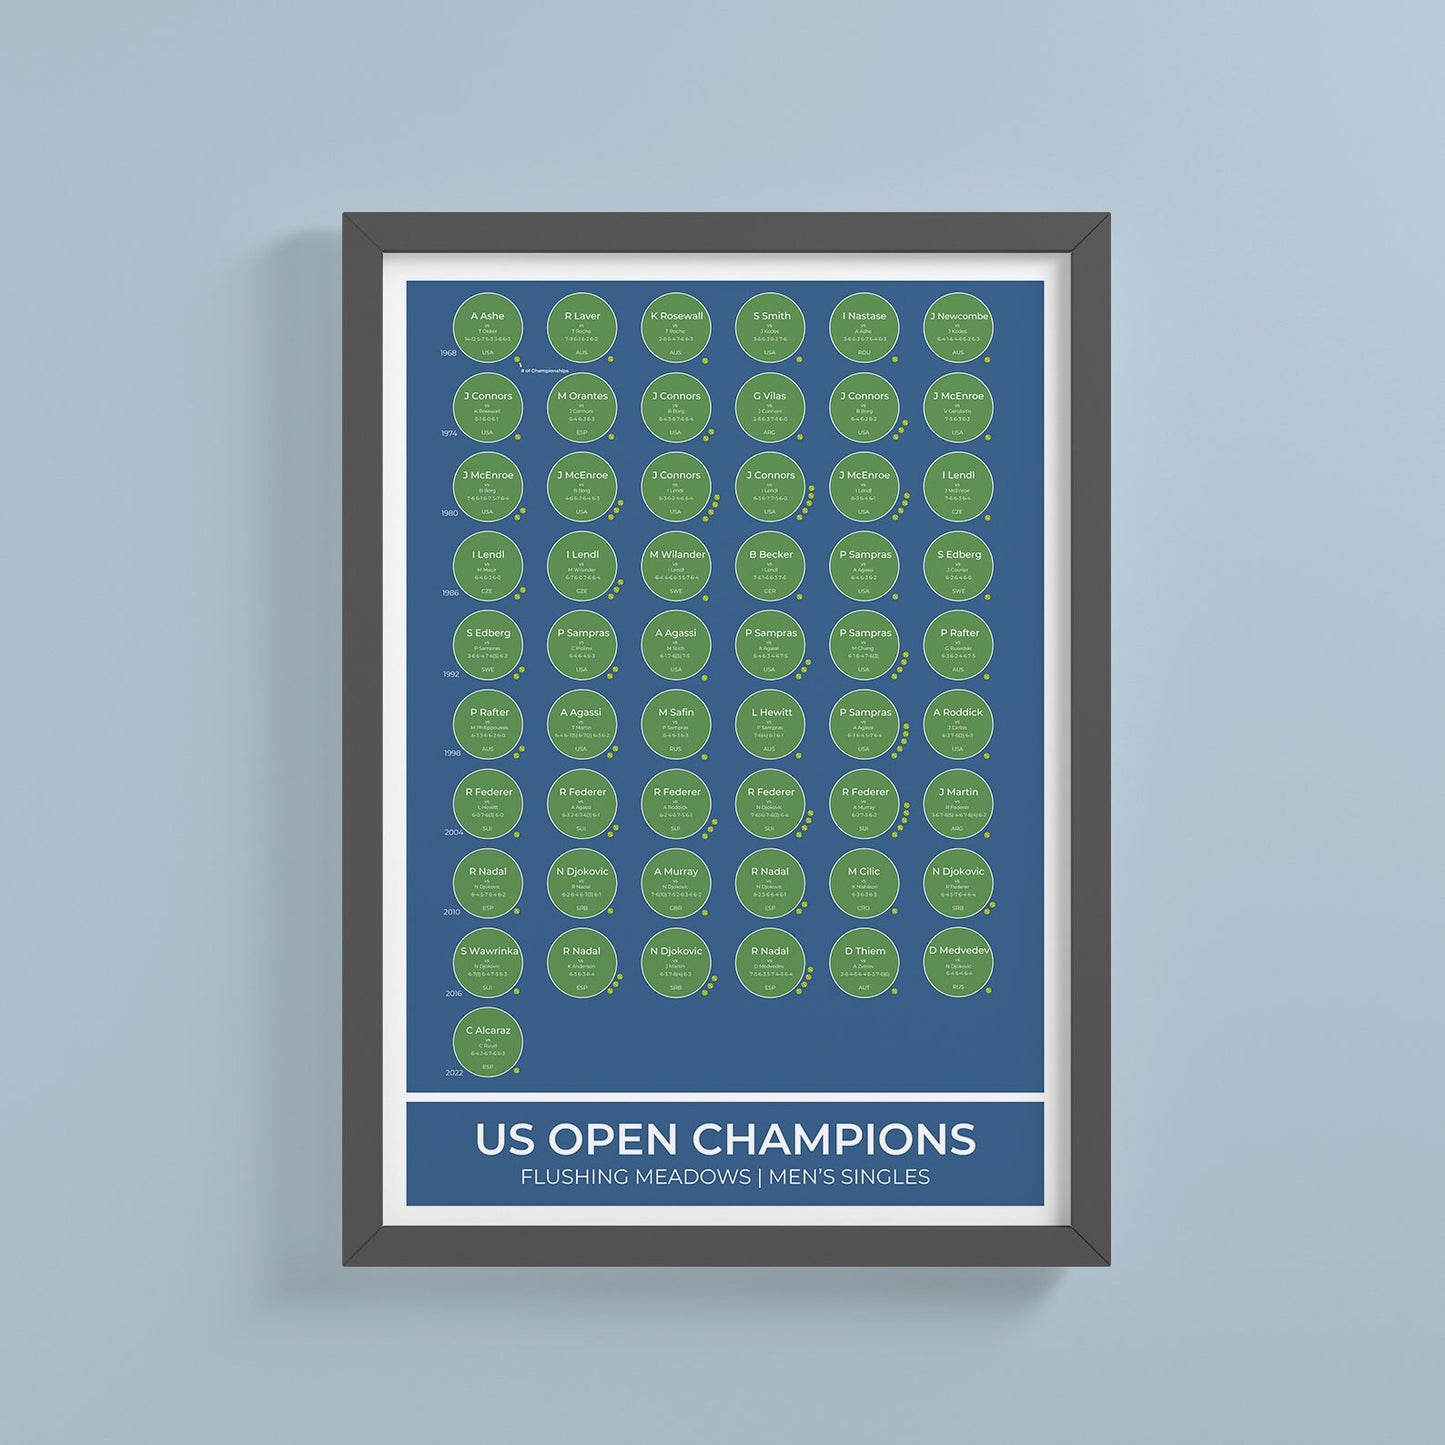 Champions du Grand Chelem de l'US Open de tennis